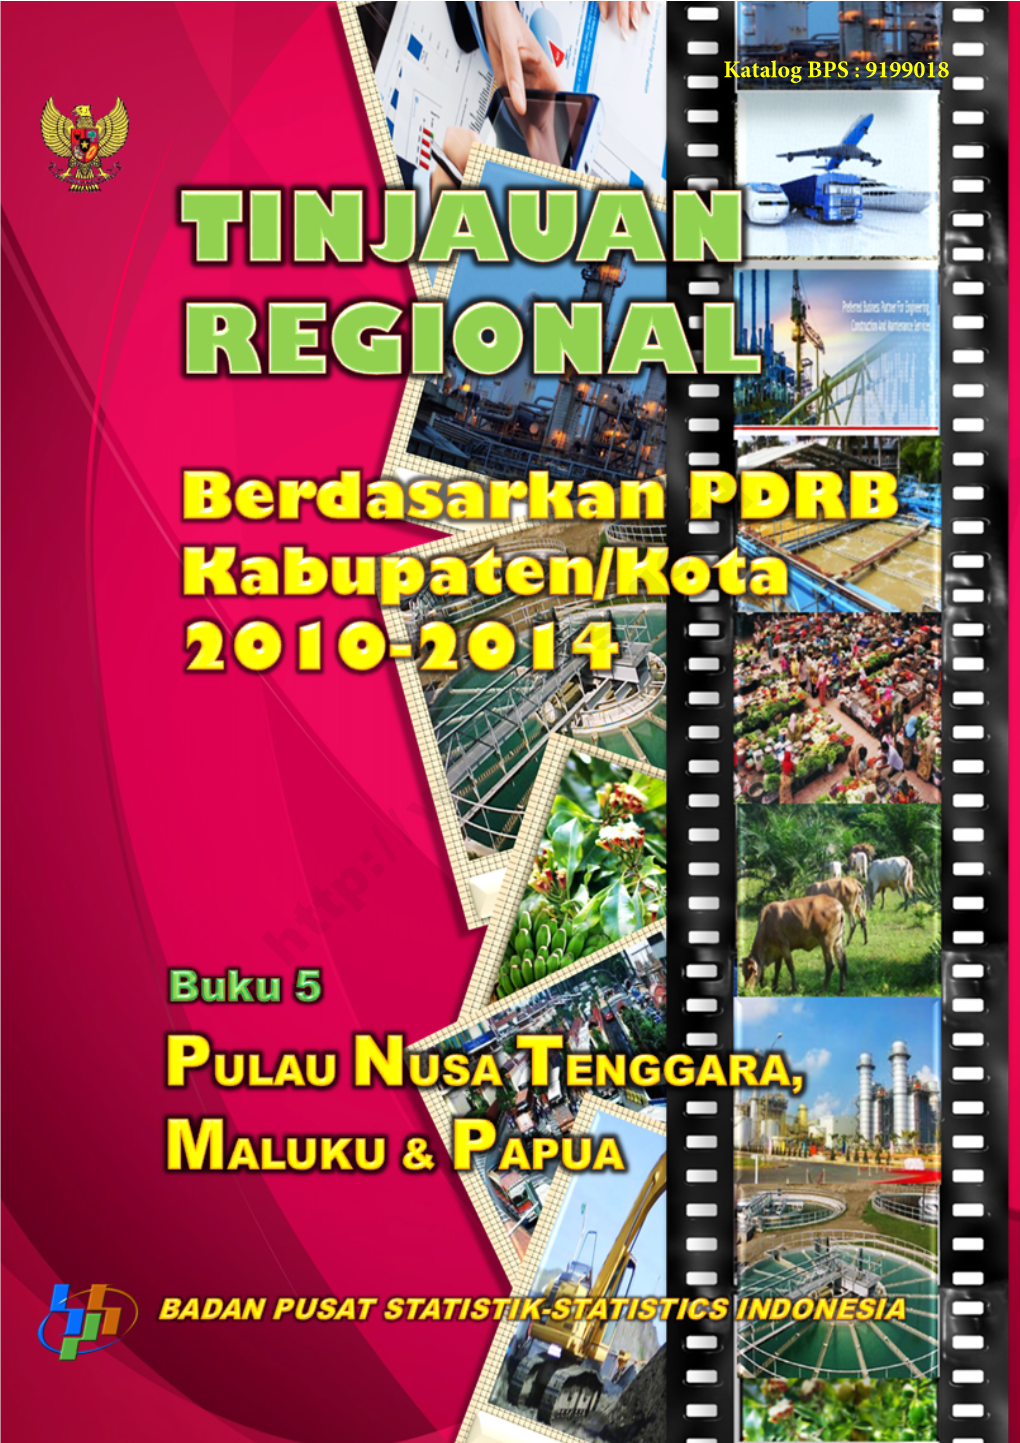 Regional Overview Based on 2011-2014 GDRP, Book 5 Nusa